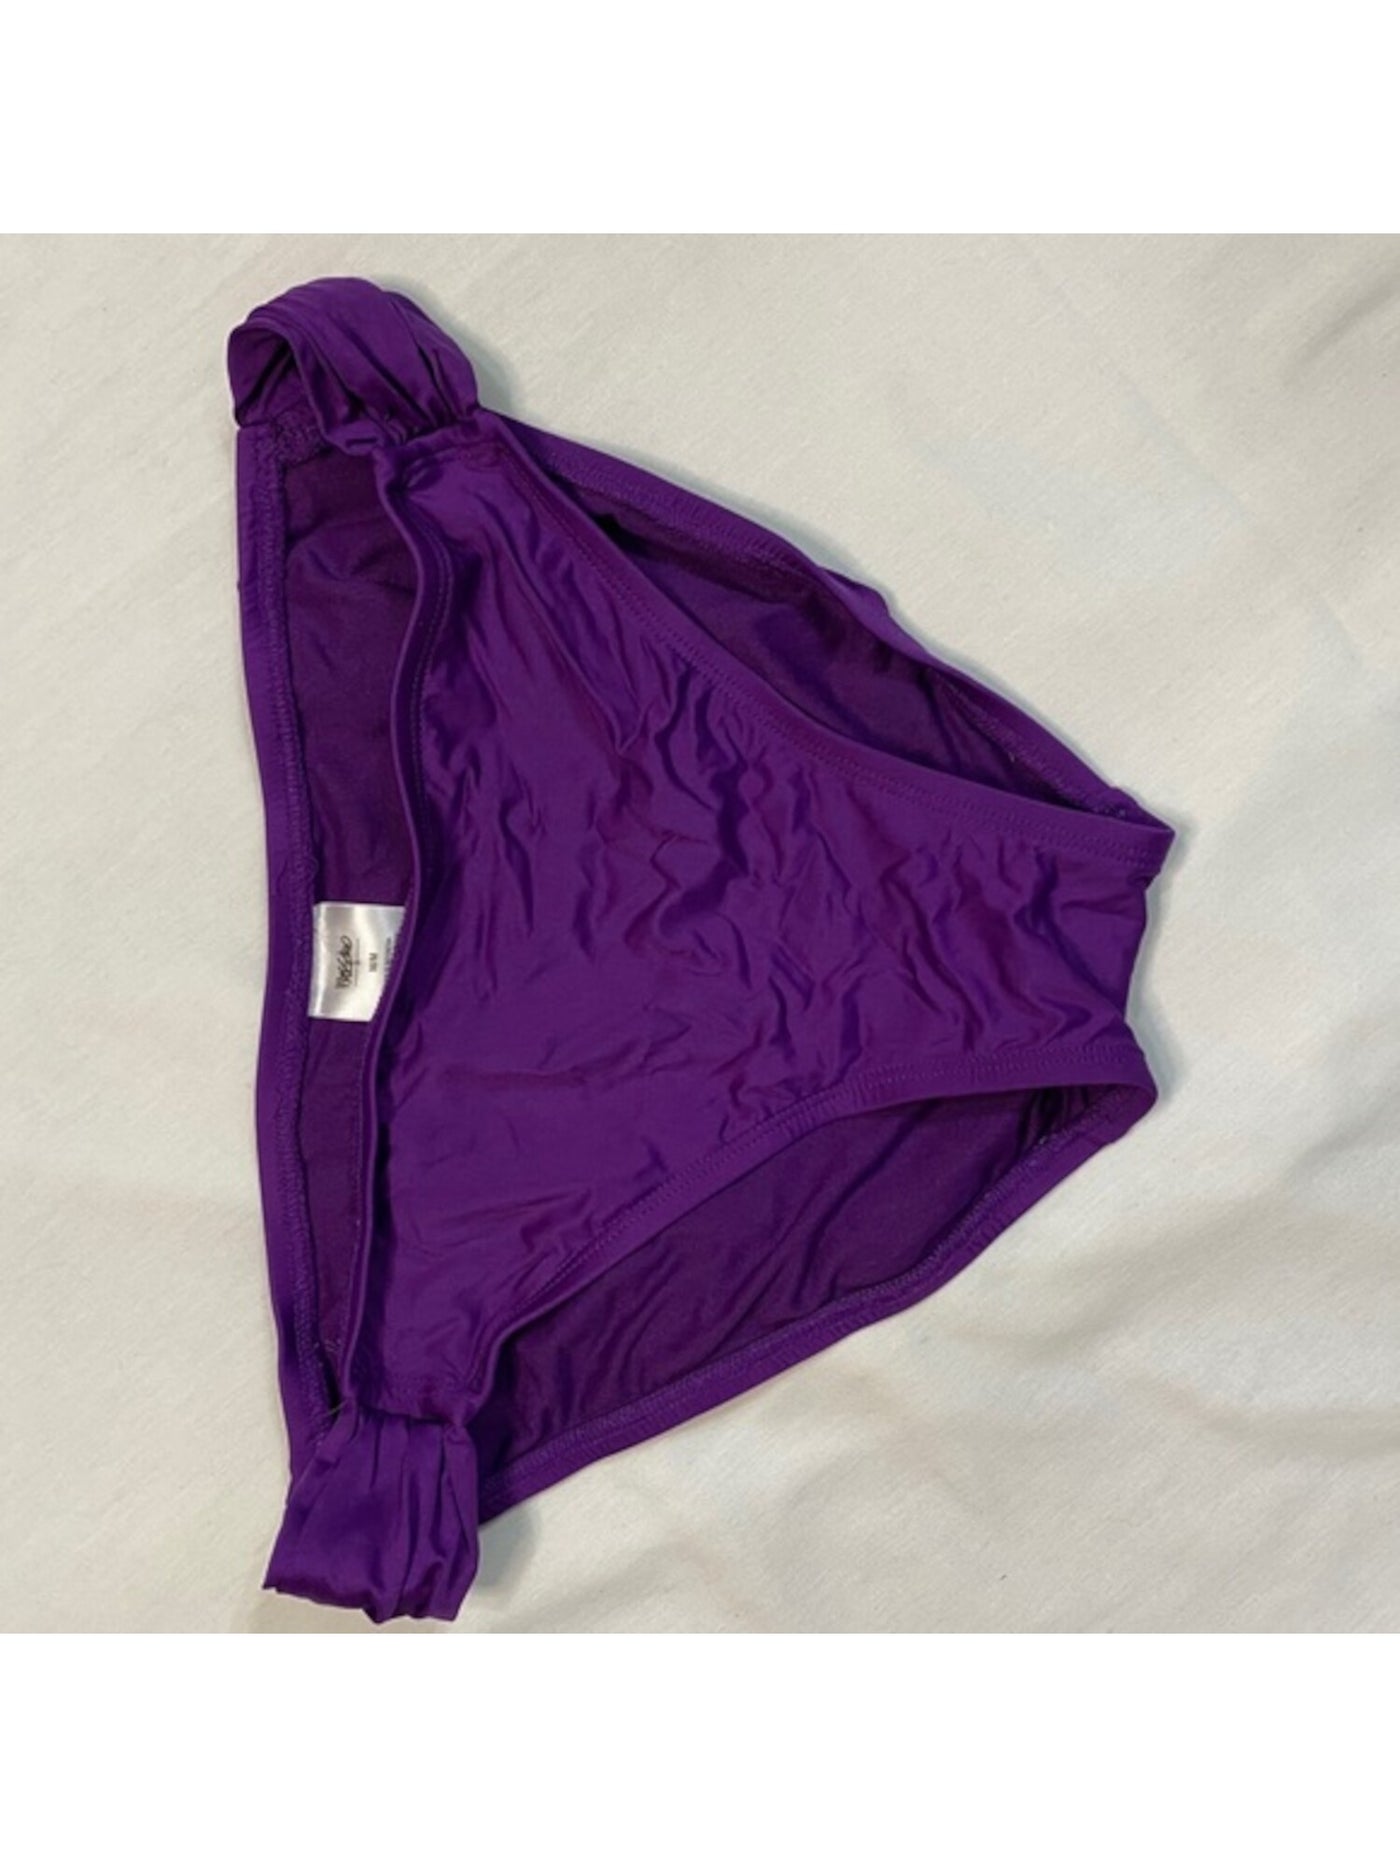 MOSSIMO SUPPLY CO. Women's Purple Bikini Bottom L